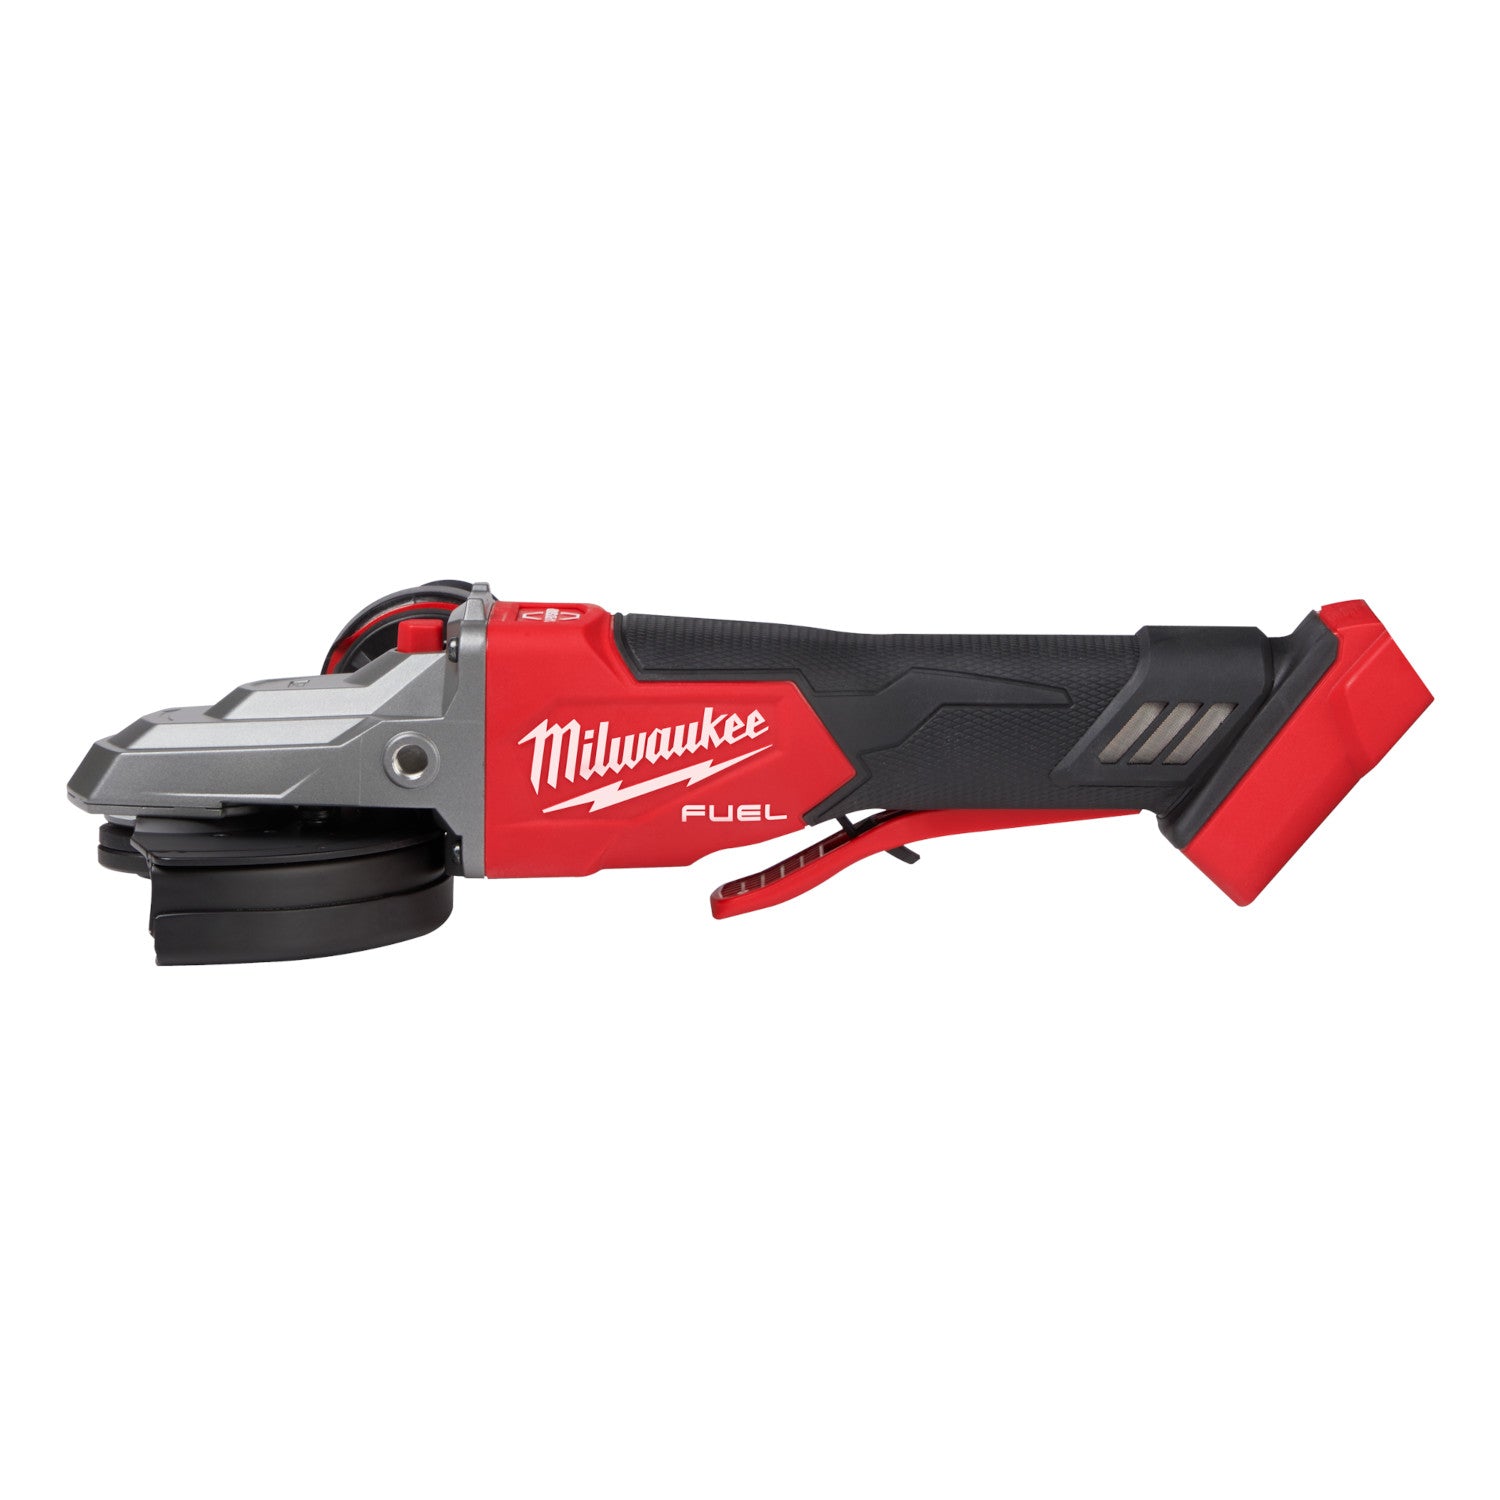 Milwaukee 2886-20 - M18 FUEL™ 5" Flathead Braking Grinder, Paddle Switch No-Lock